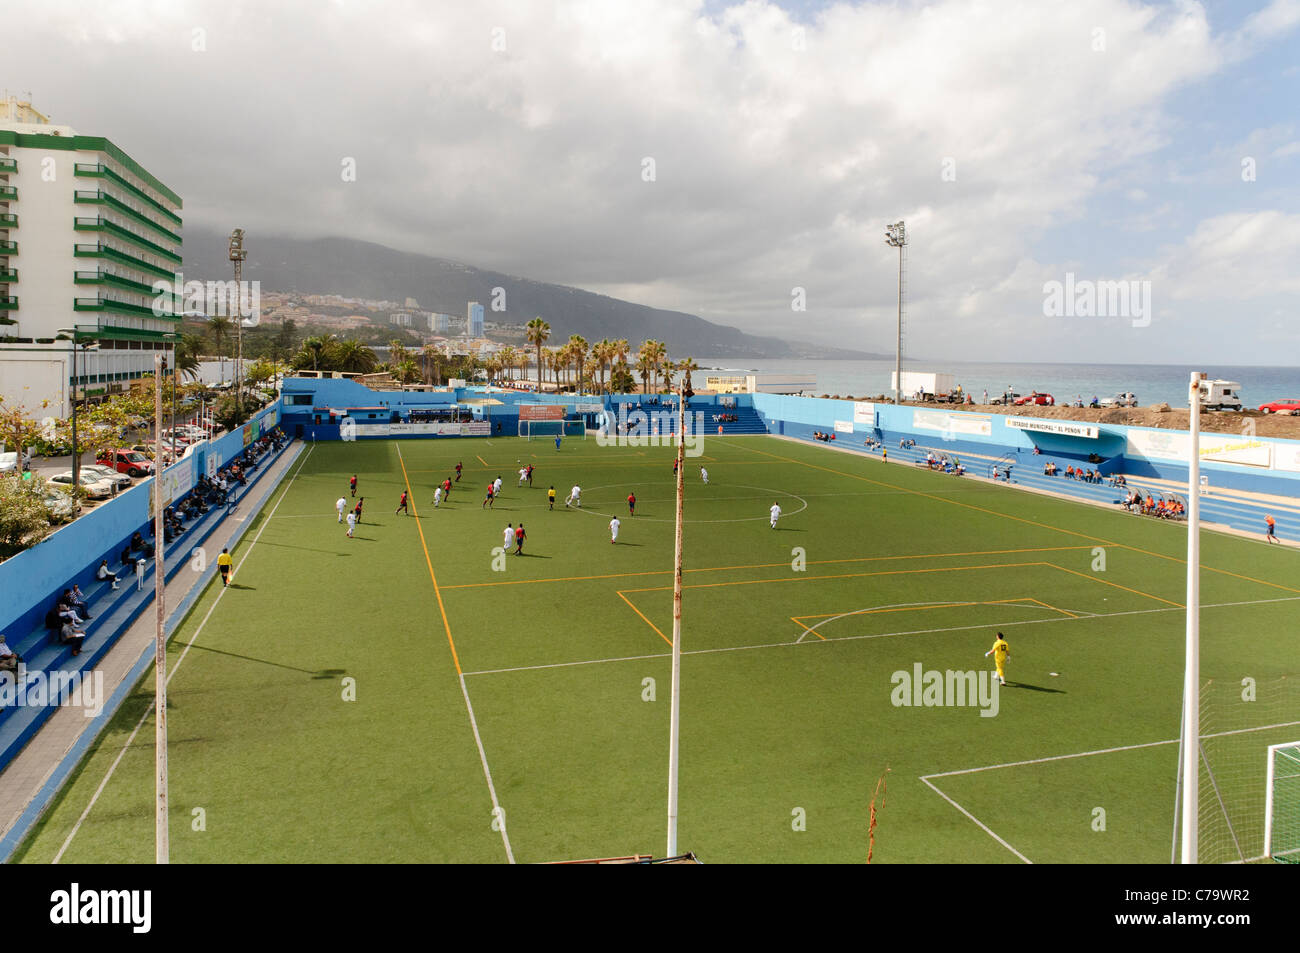 Stade de Football, Puerto de la Cruz, Tenerife, Canaries, Espagne, Europe Banque D'Images